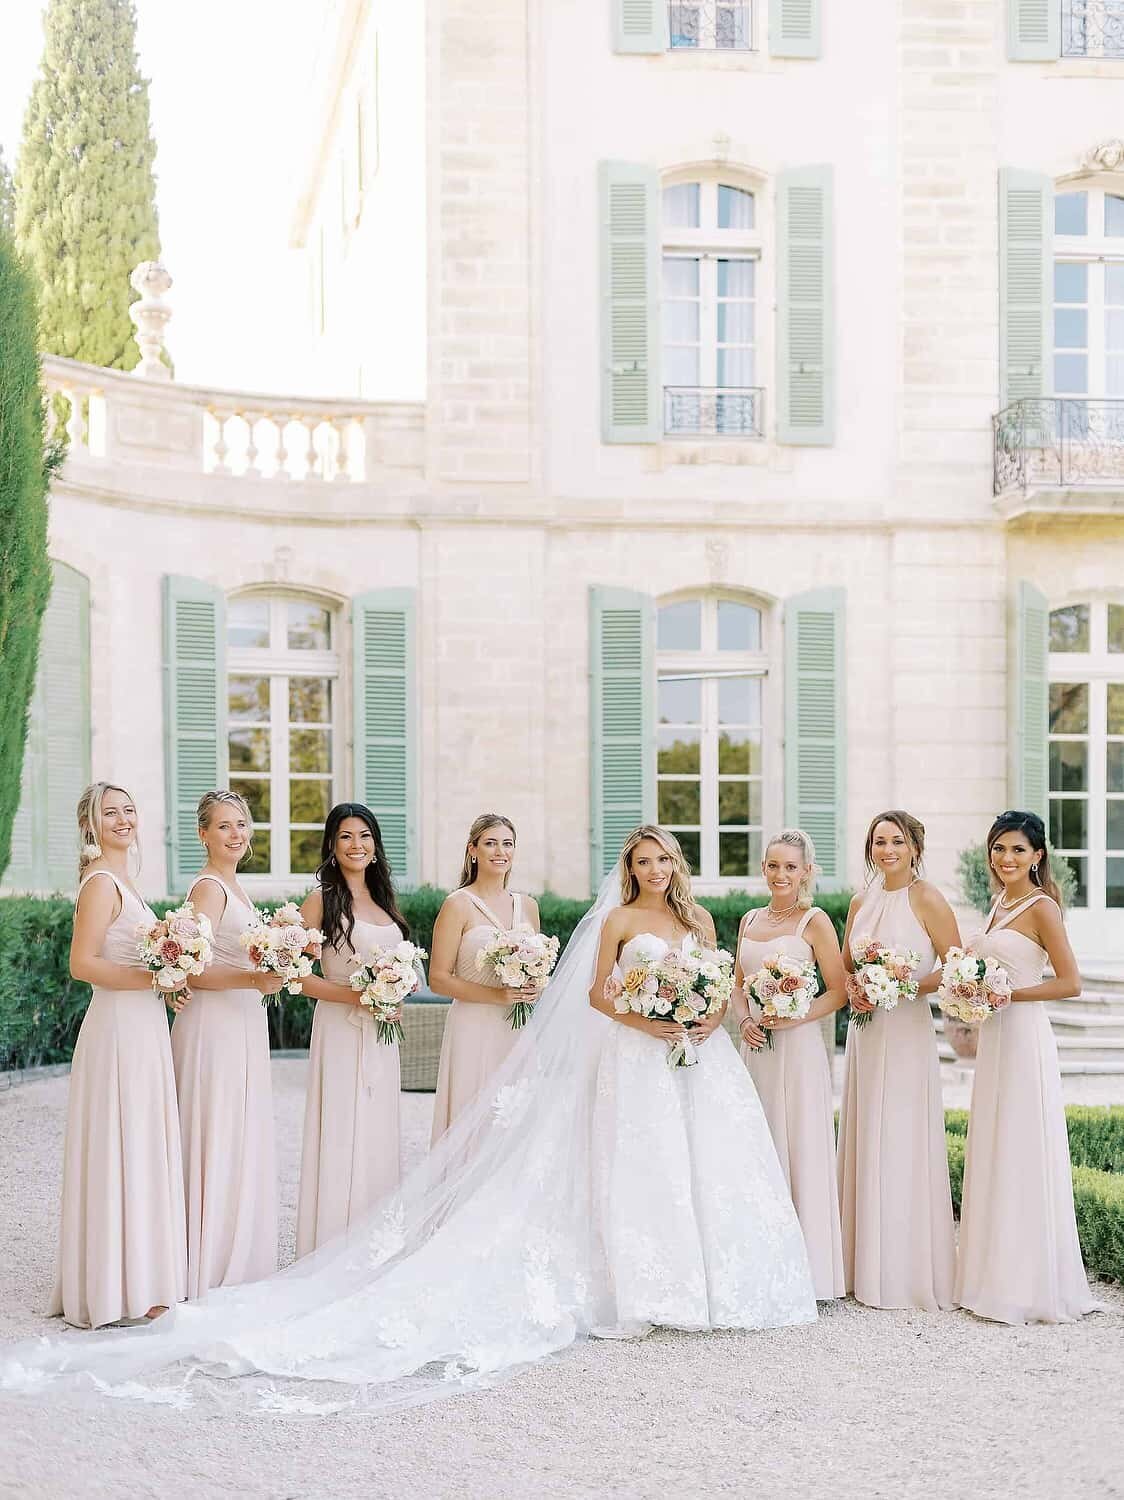 Chateau-de-Tourreau-France-wedding-by-Julia-Kaptelova_Photography-0410_1